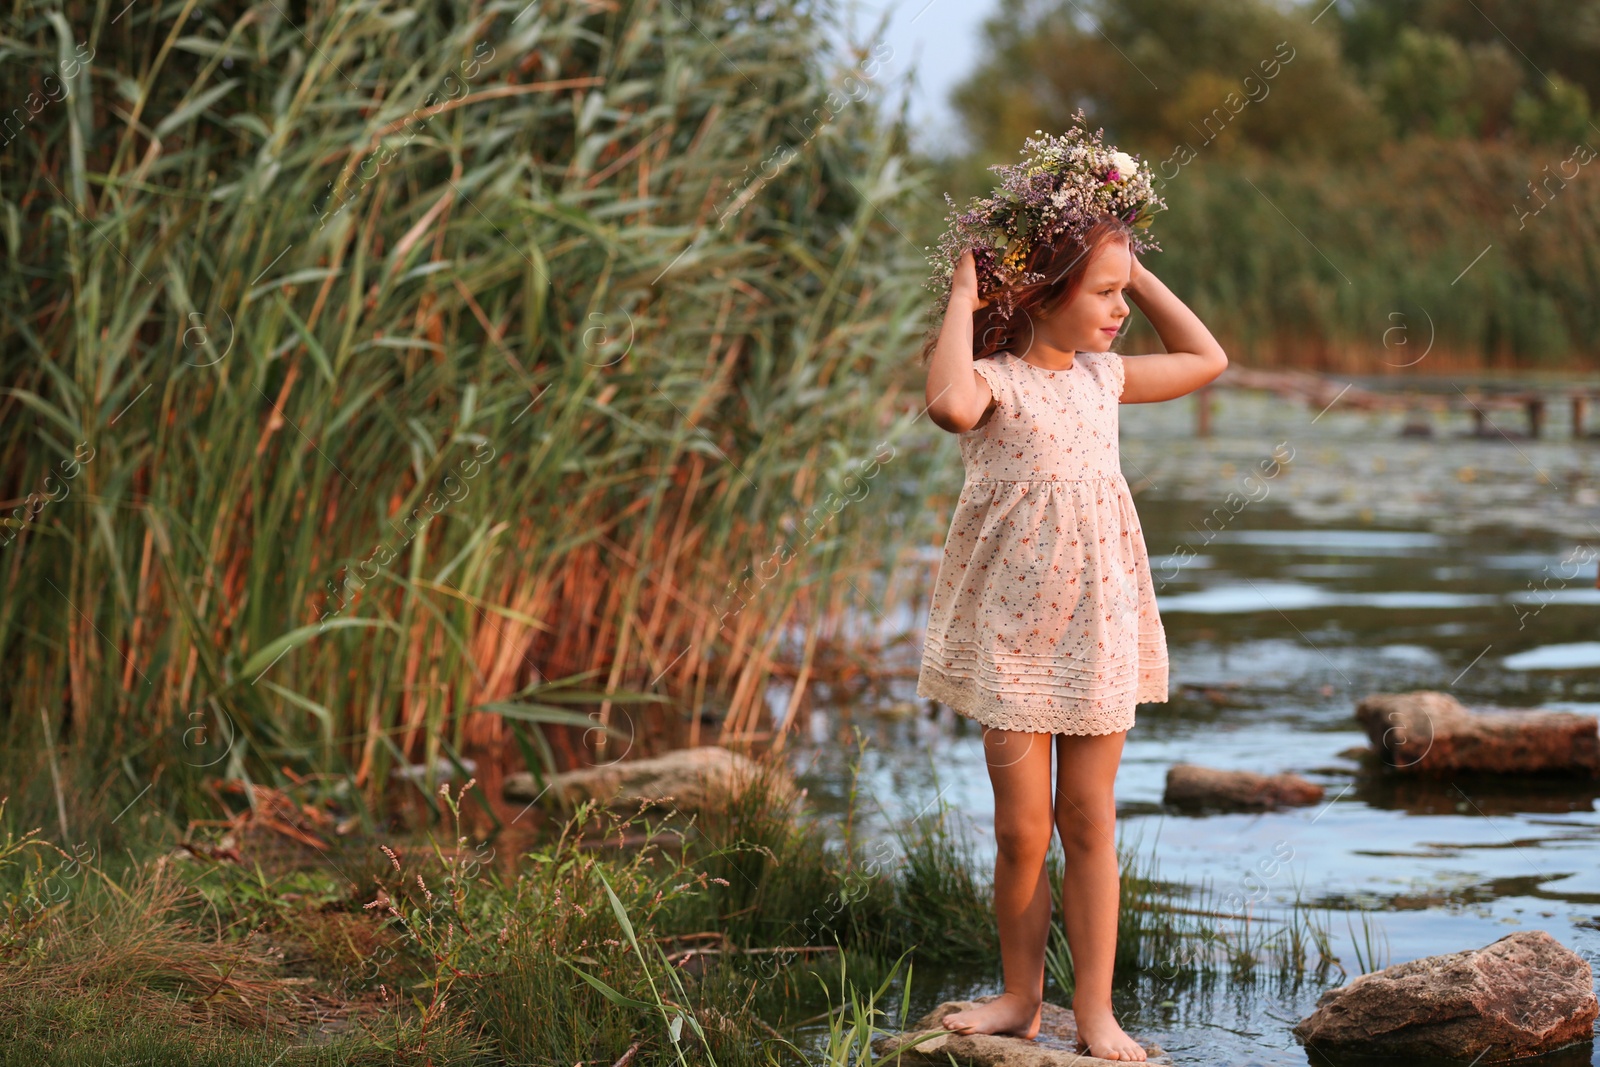 Photo of Cute little girl wearing wreath made of beautiful flowers near river